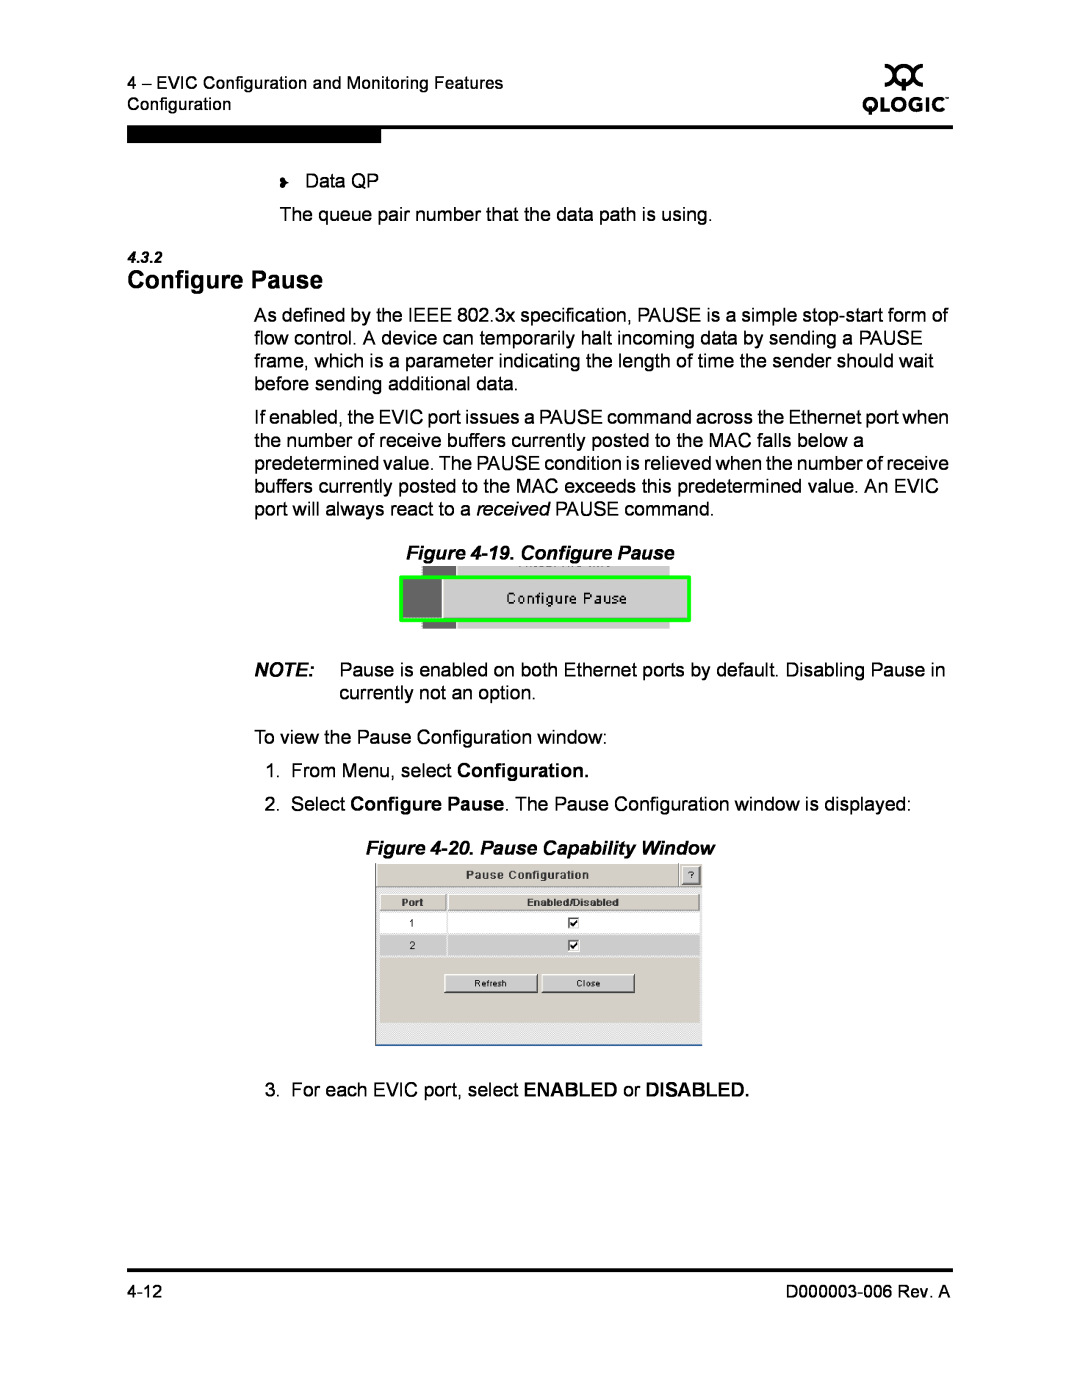 Q-Logic 9000 manual 19. Configure Pause, 20. Pause Capability Window 